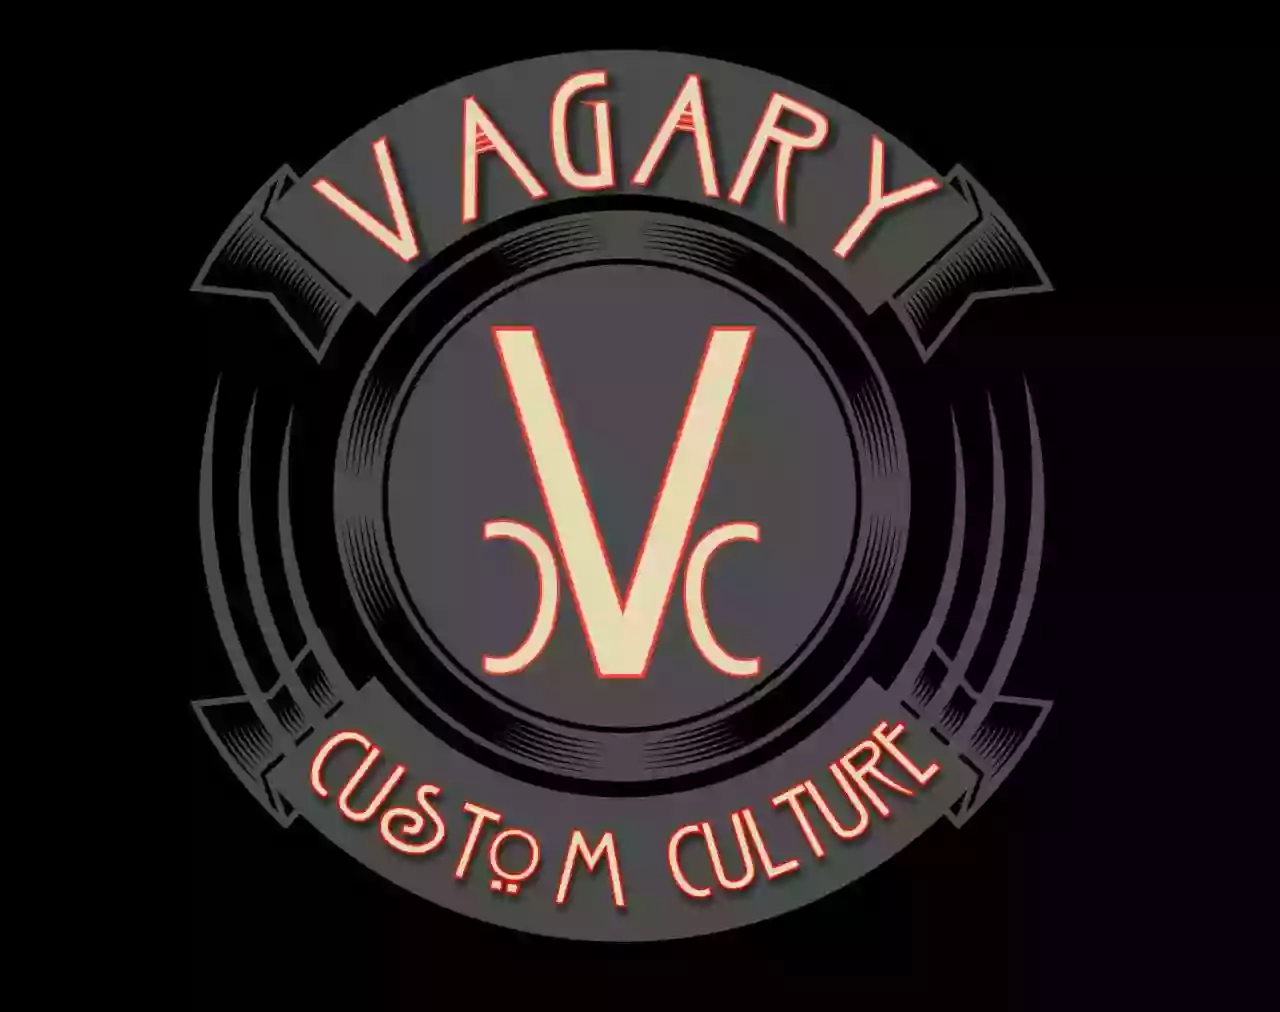 Vagary Custom Culture